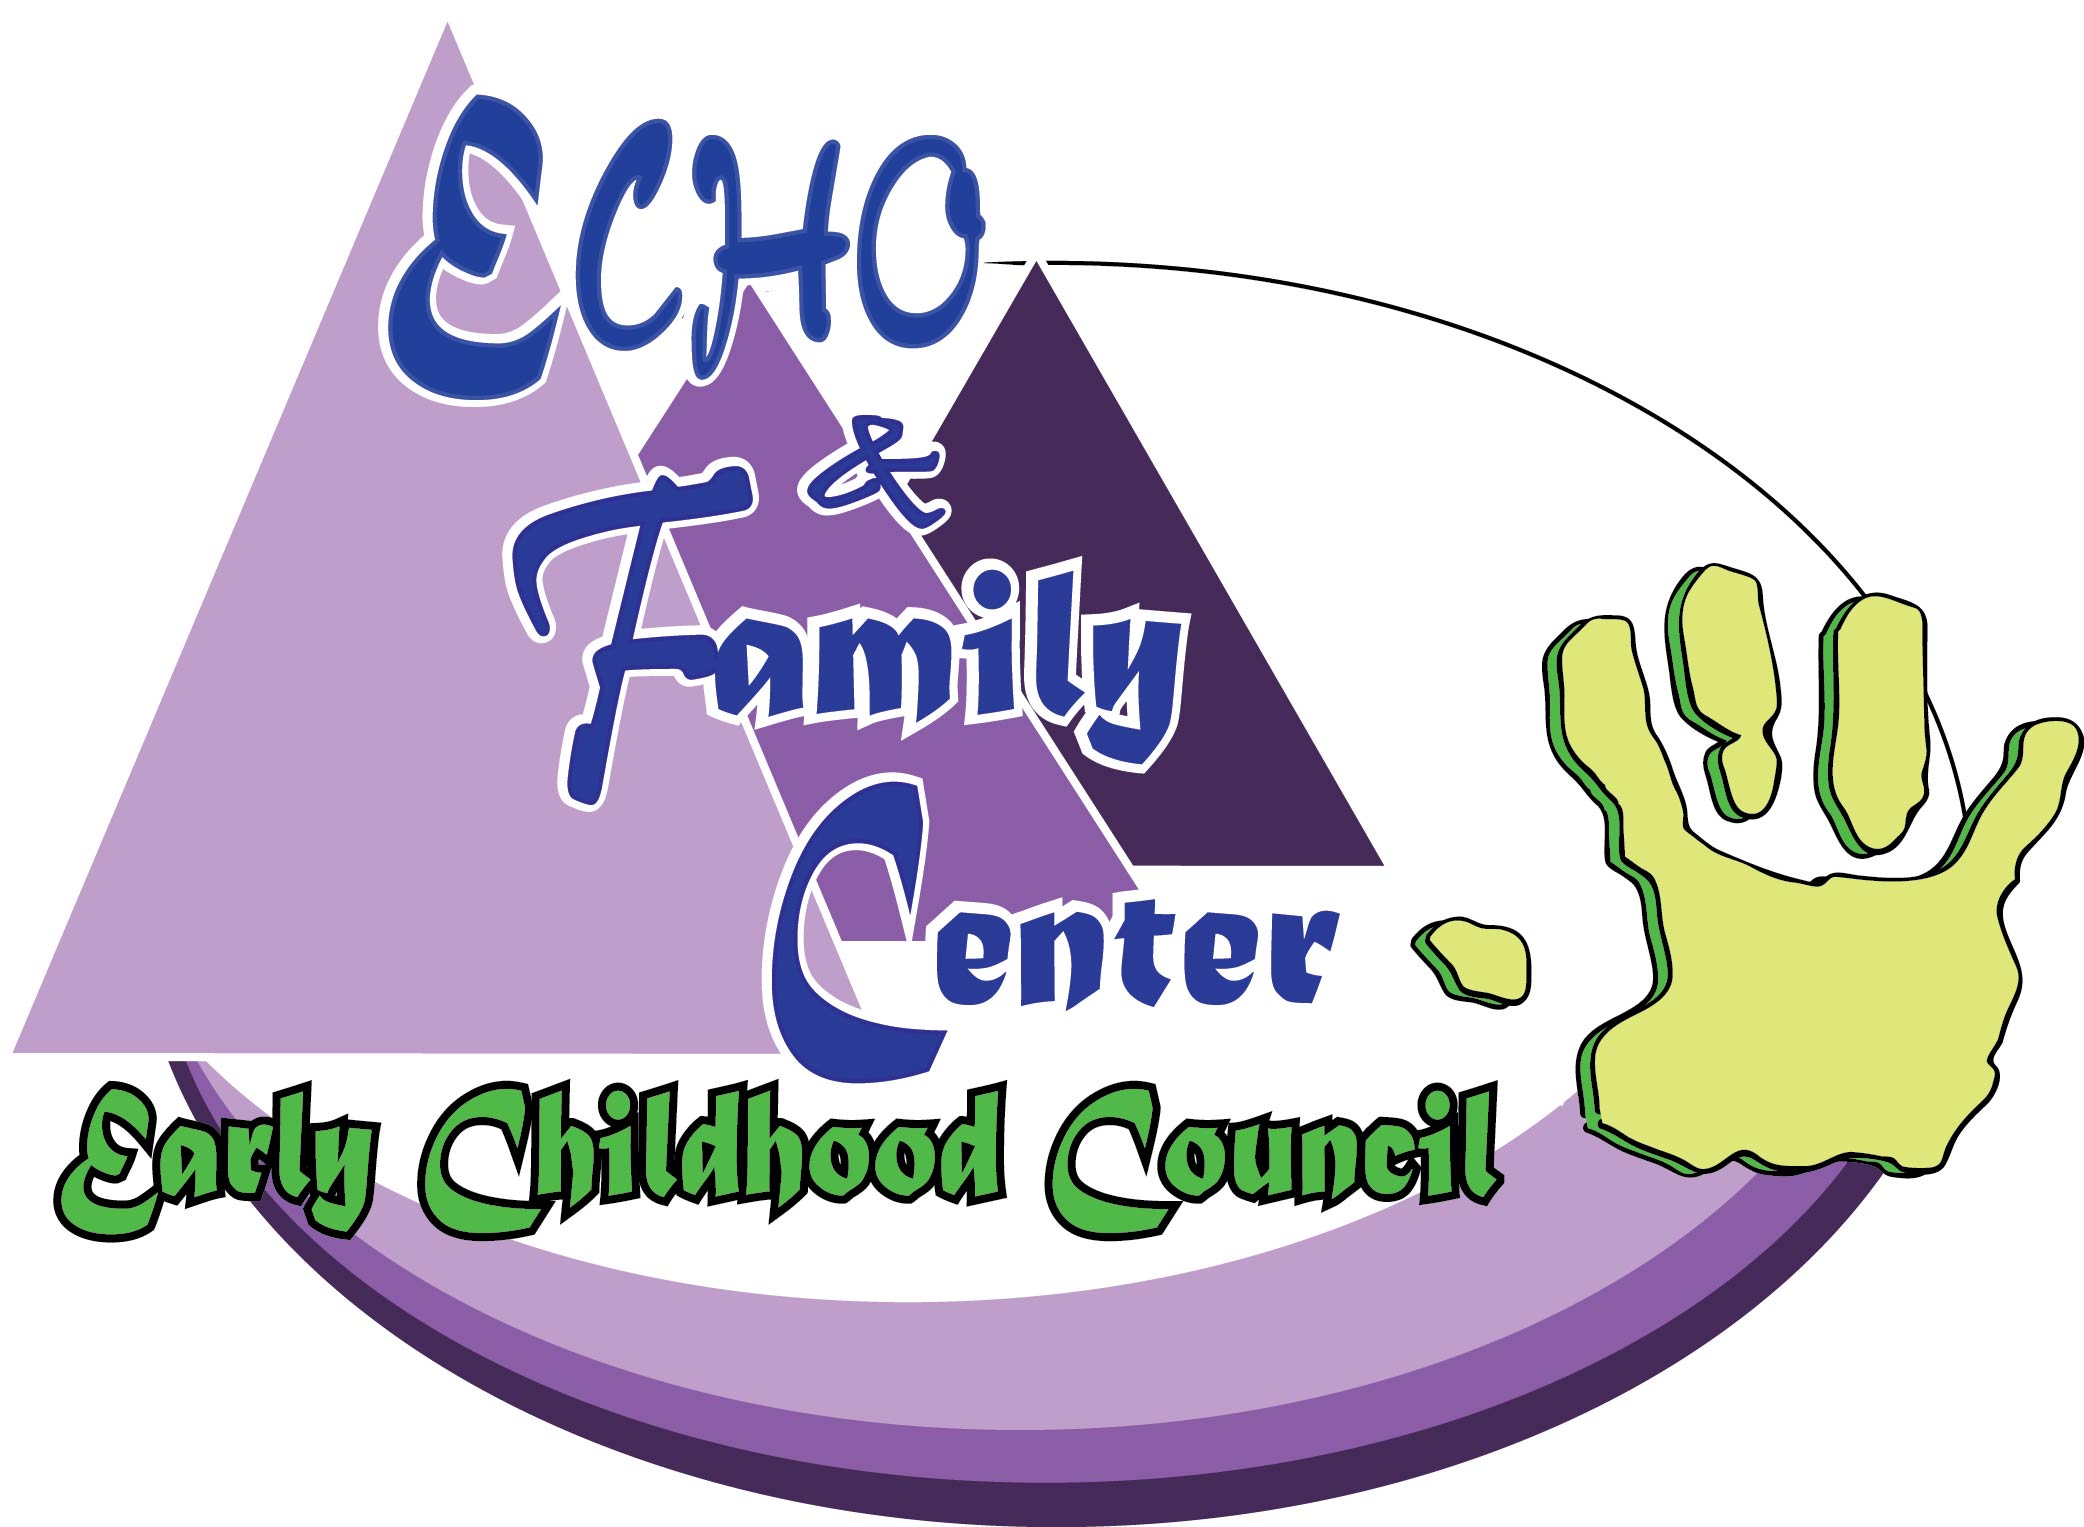 Echo Family Center